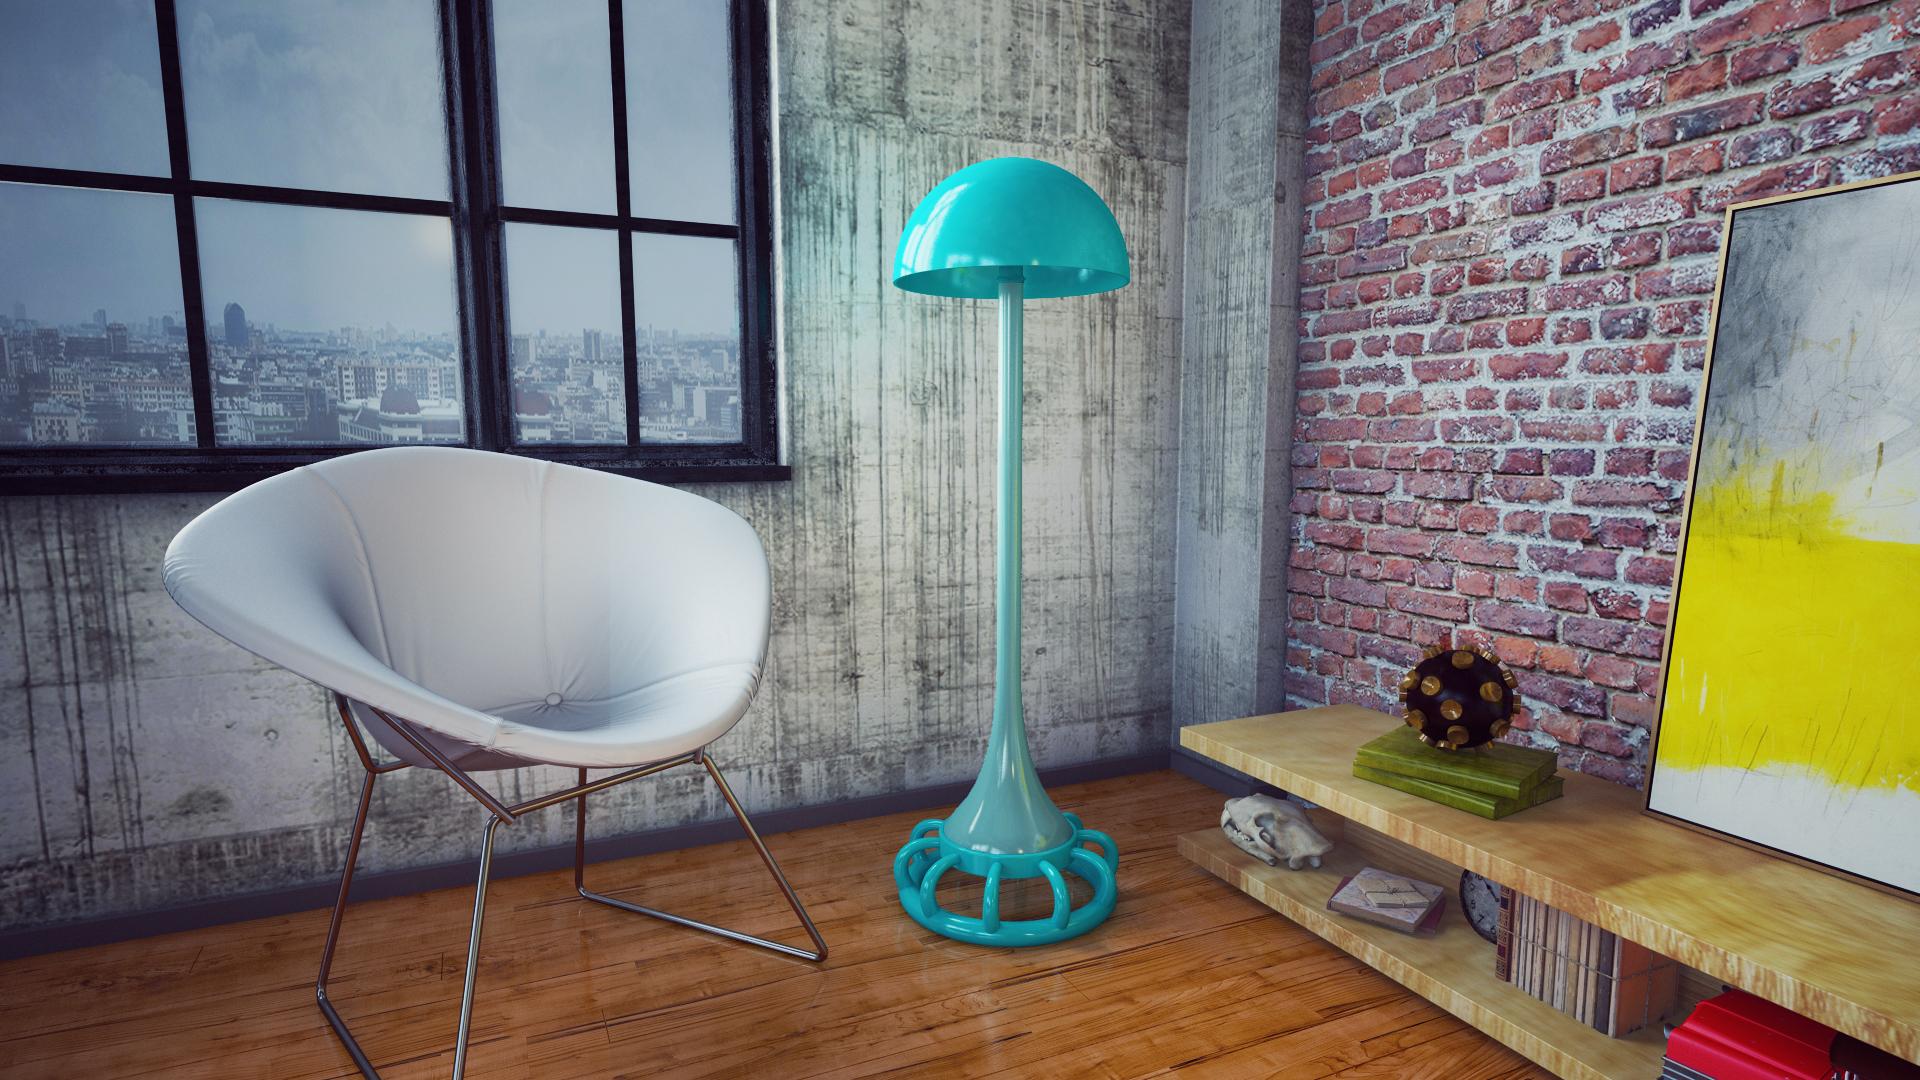 Cast Jellyfish Floor Lamp: Artistic Turquoise Illumination For Sale